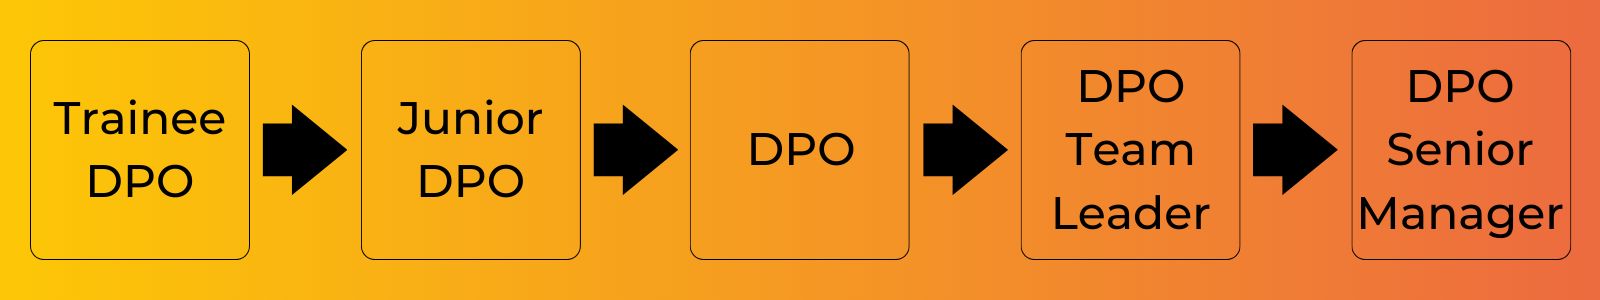 DPO training career path